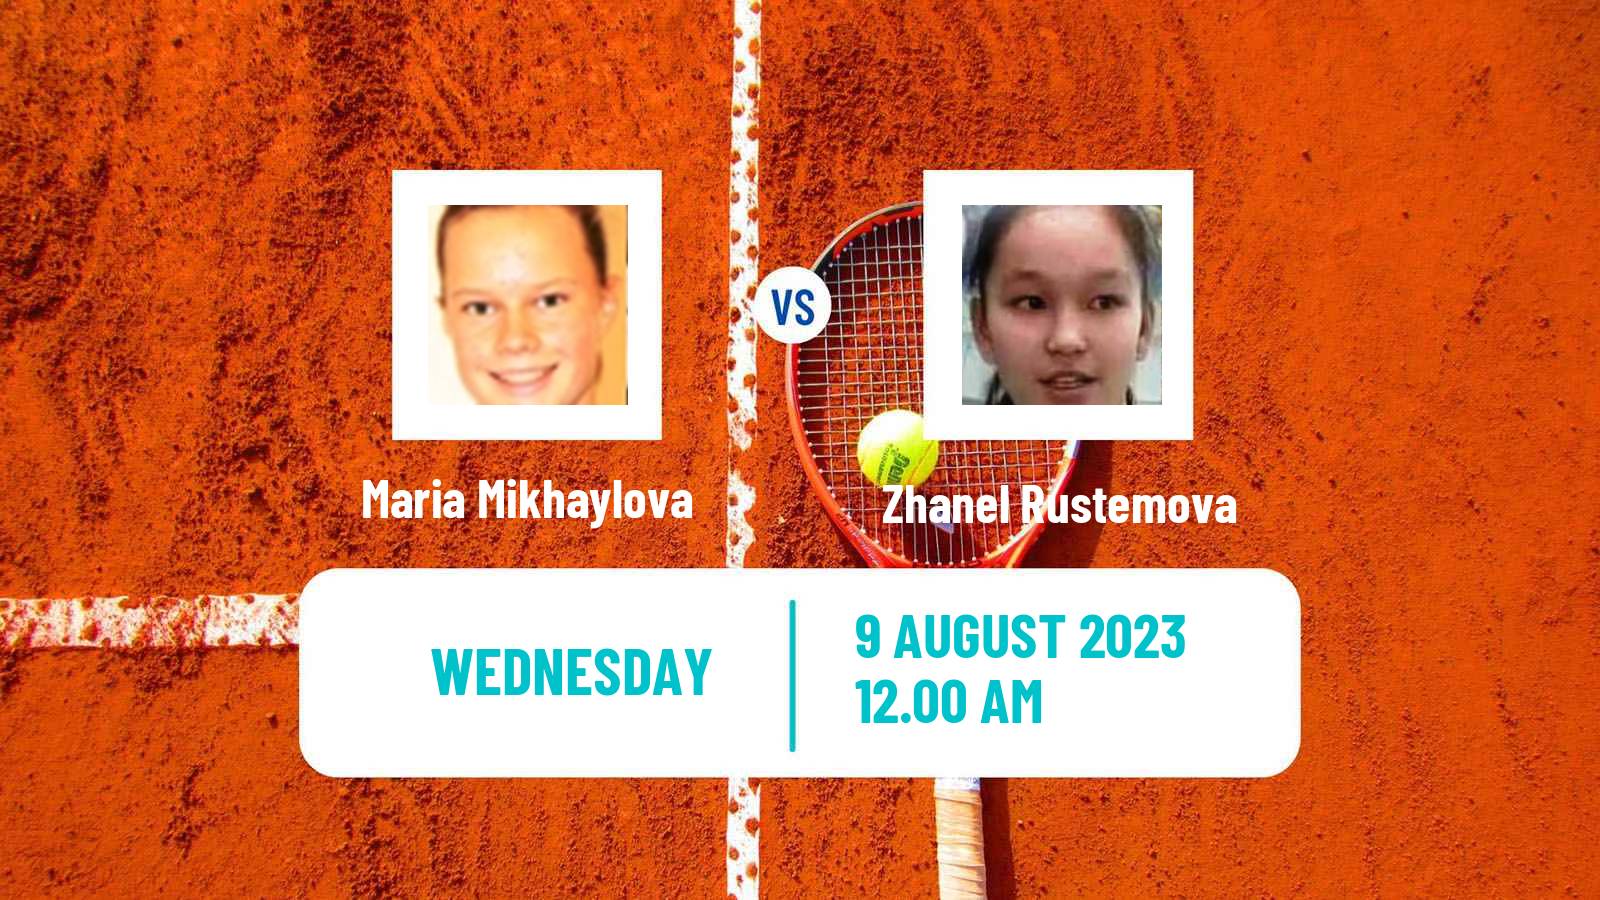 Tennis ITF W15 Ust Kamenogorsk Women Maria Mikhaylova - Zhanel Rustemova